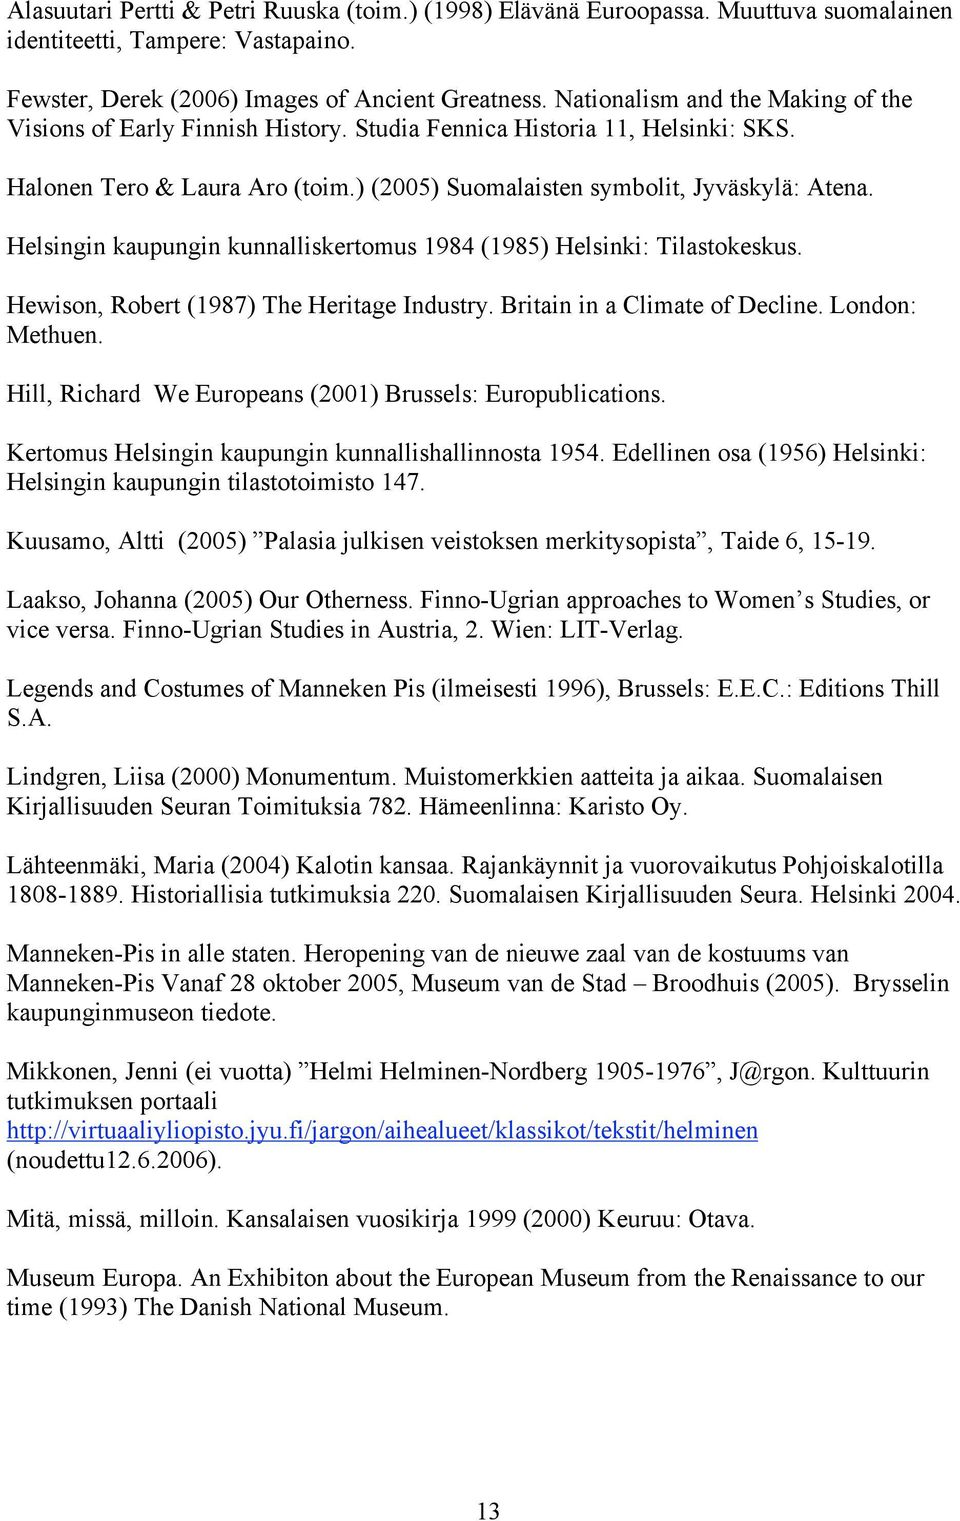 Helsingin kaupungin kunnalliskertomus 1984 (1985) Helsinki: Tilastokeskus. Hewison, Robert (1987) The Heritage Industry. Britain in a Climate of Decline. London: Methuen.